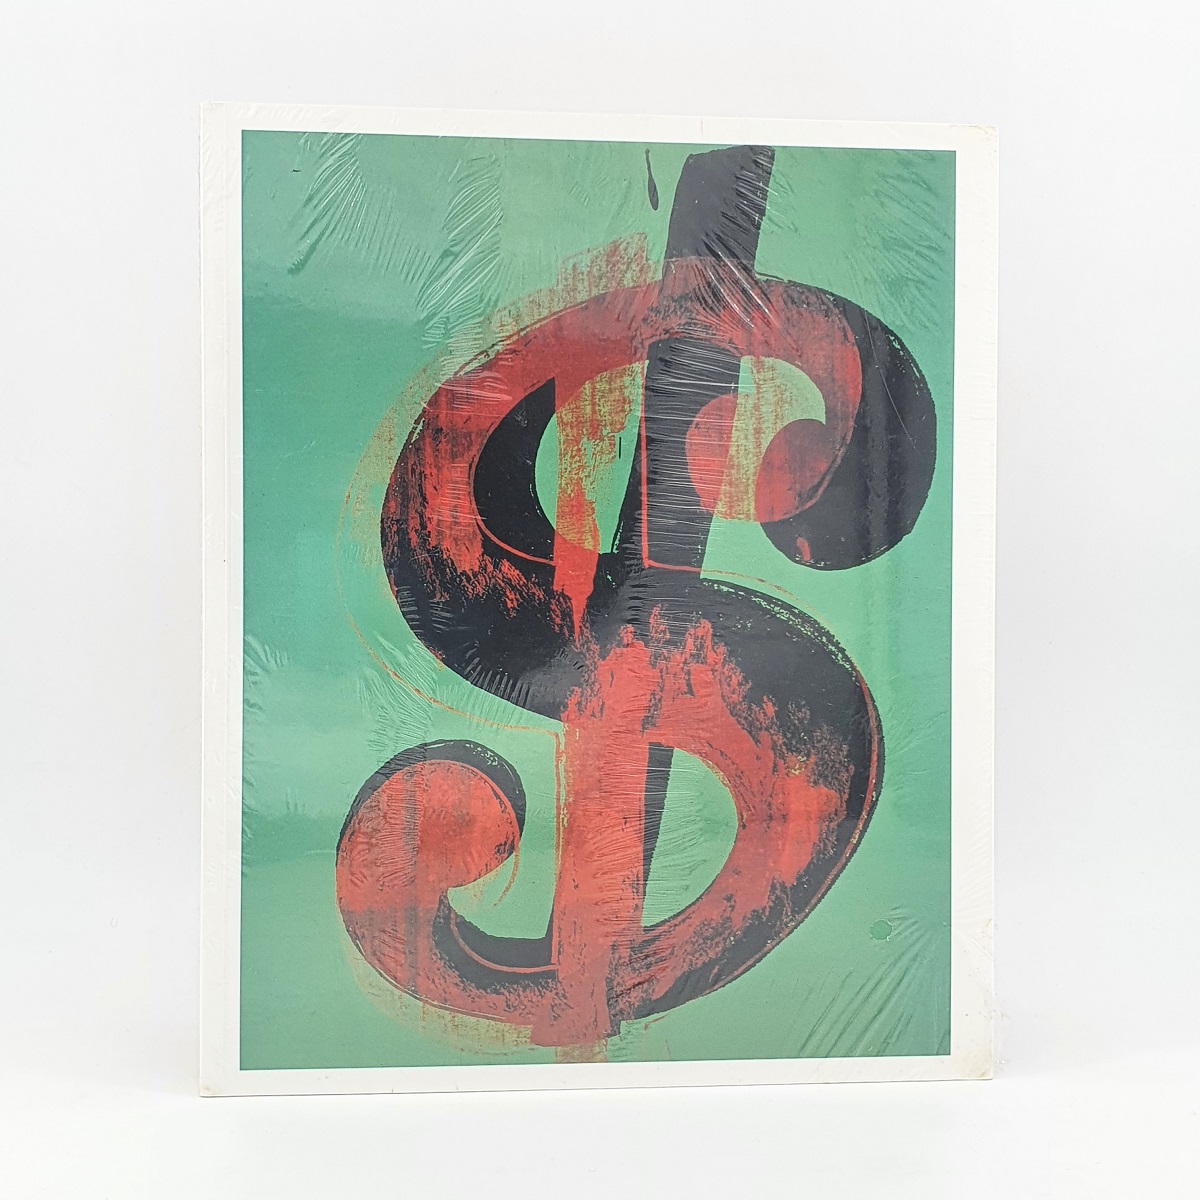 Andy Warhol. $. Dollar Signs